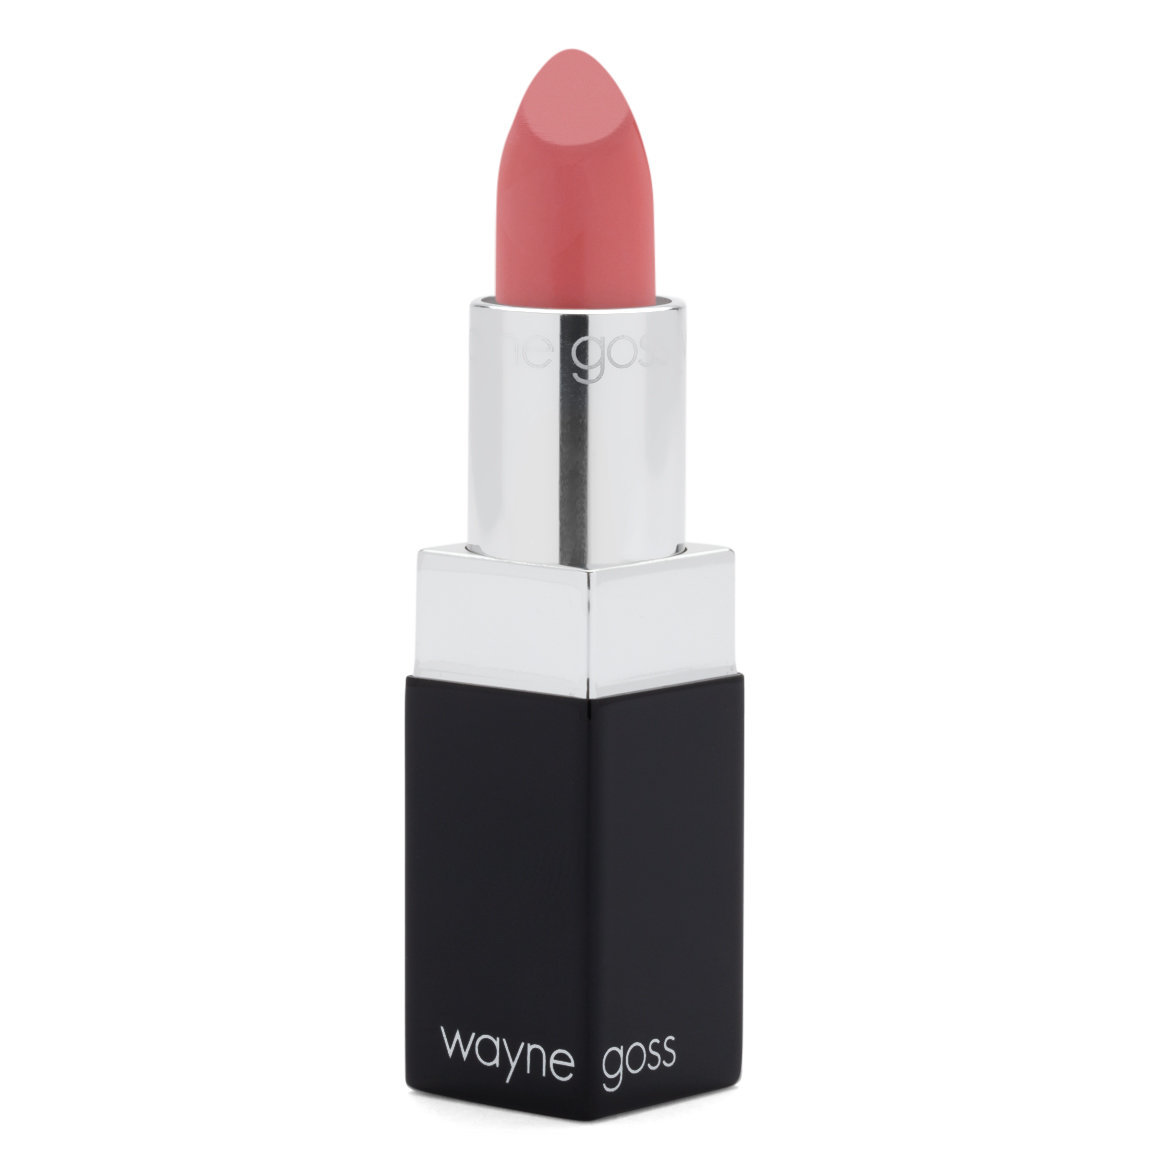 Wayne Goss The Luxury Cream Lipstick Lily alternative view 1.